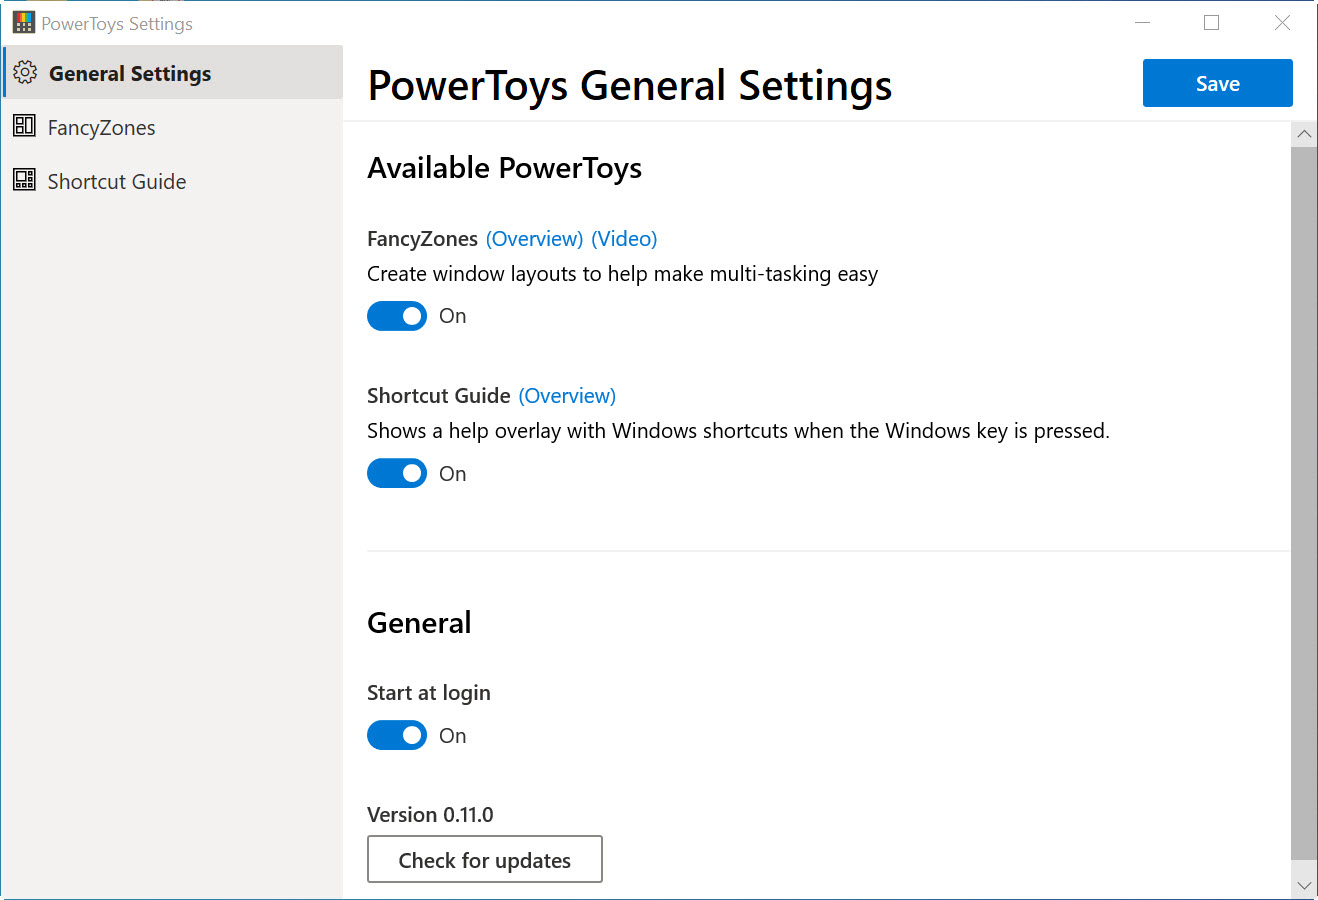 PowerToys for Windows 10 - Main Interface